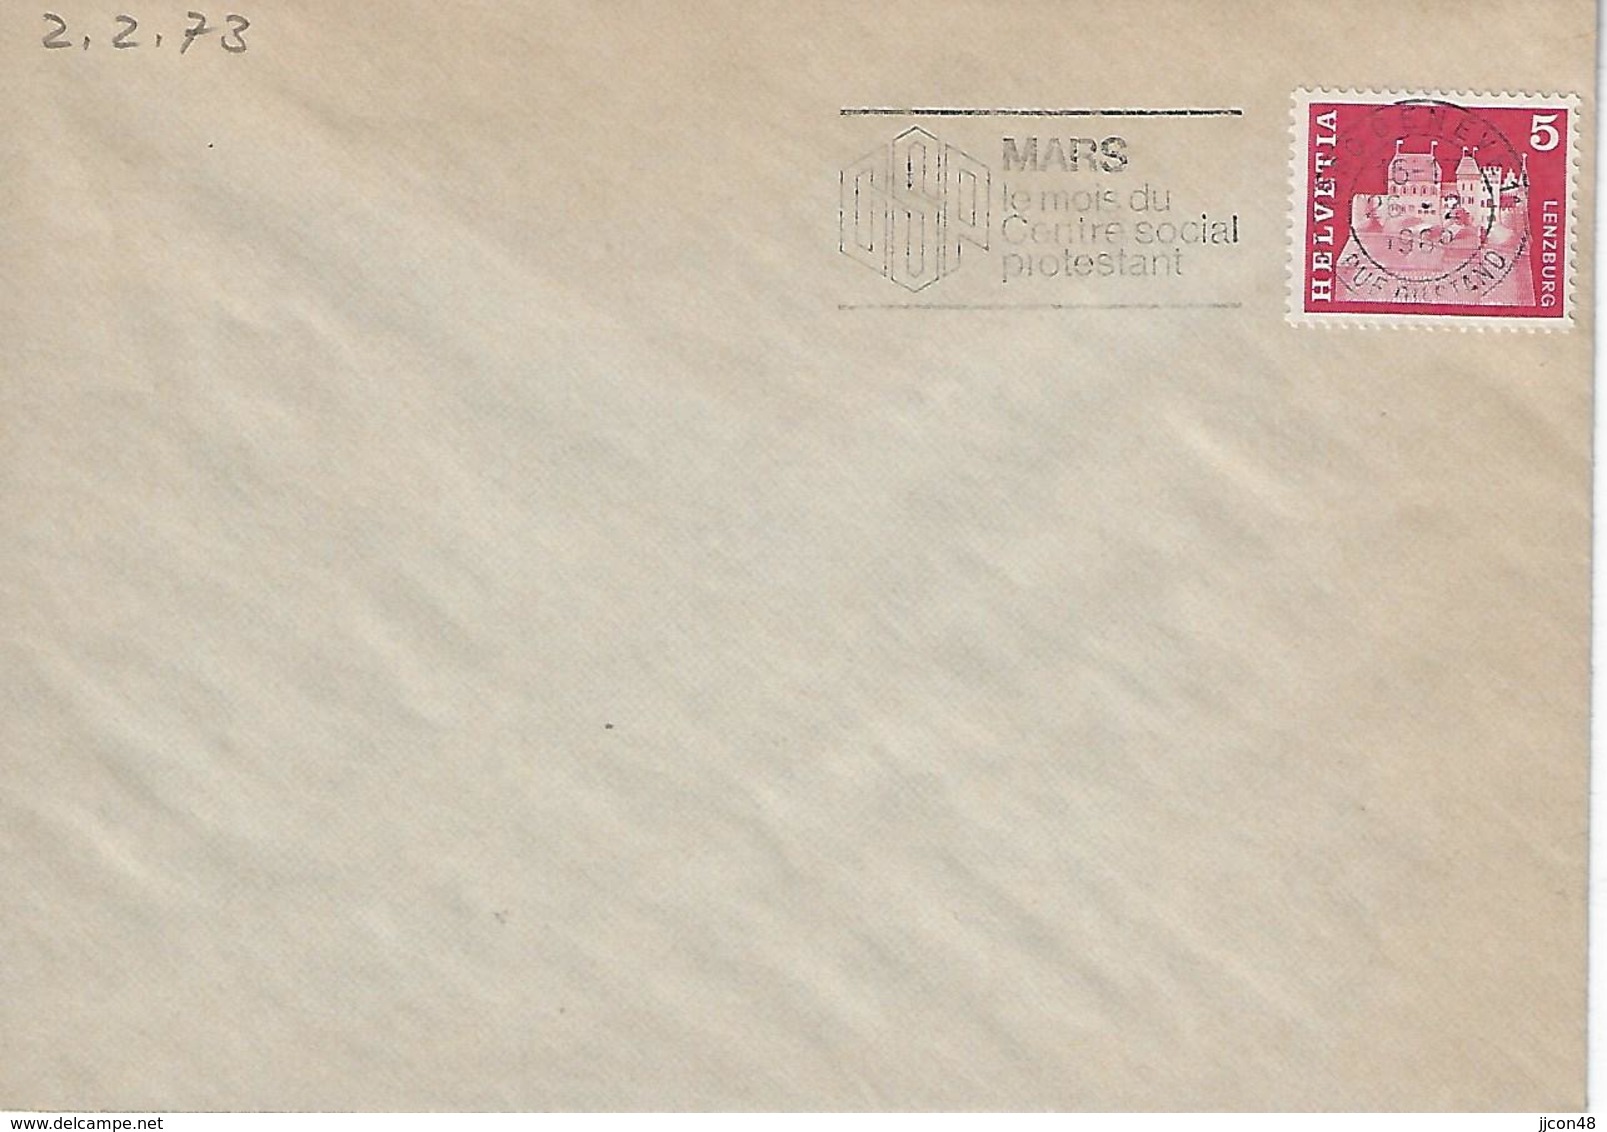 Switzerland 1969  GENEVE  26.2.69  Mi.878 - Postmark Collection